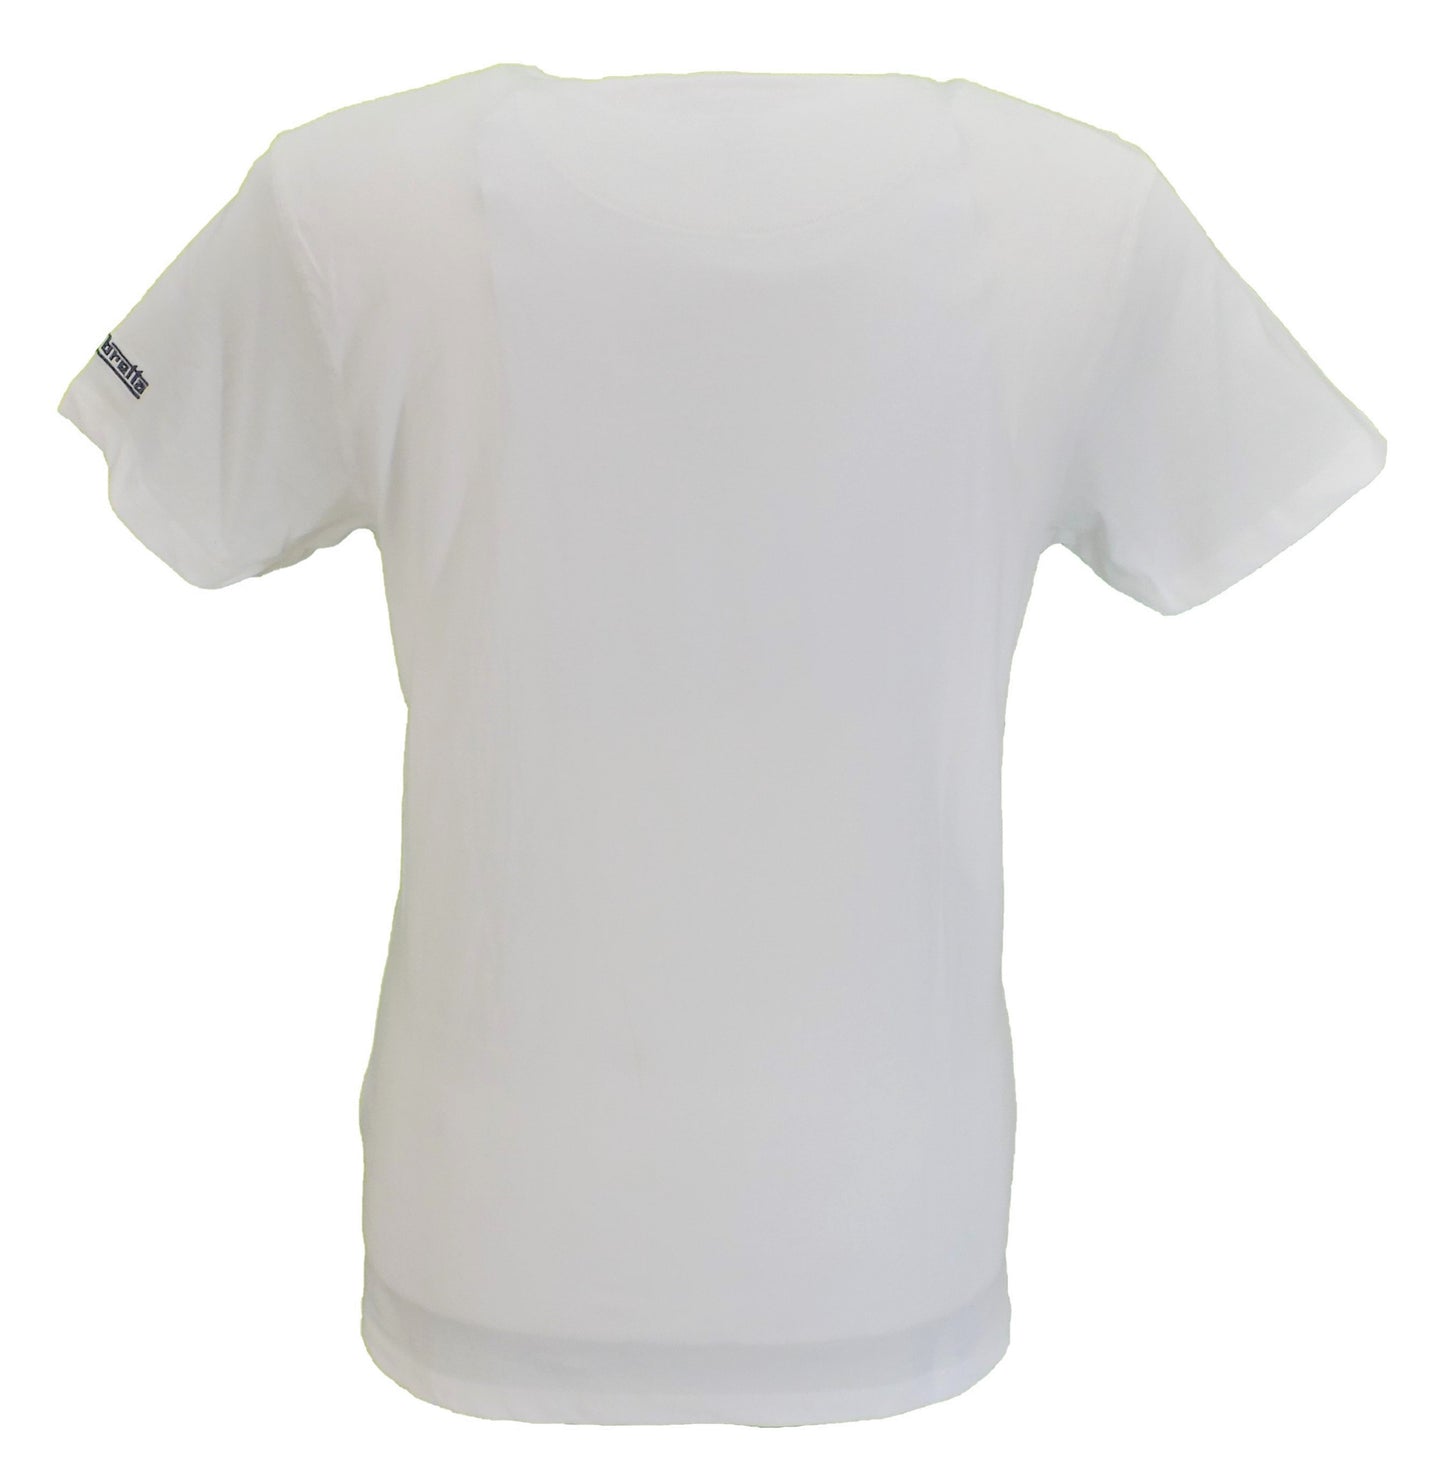 Lambretta camiseta retro a rayas blanca/azul marino para hombre